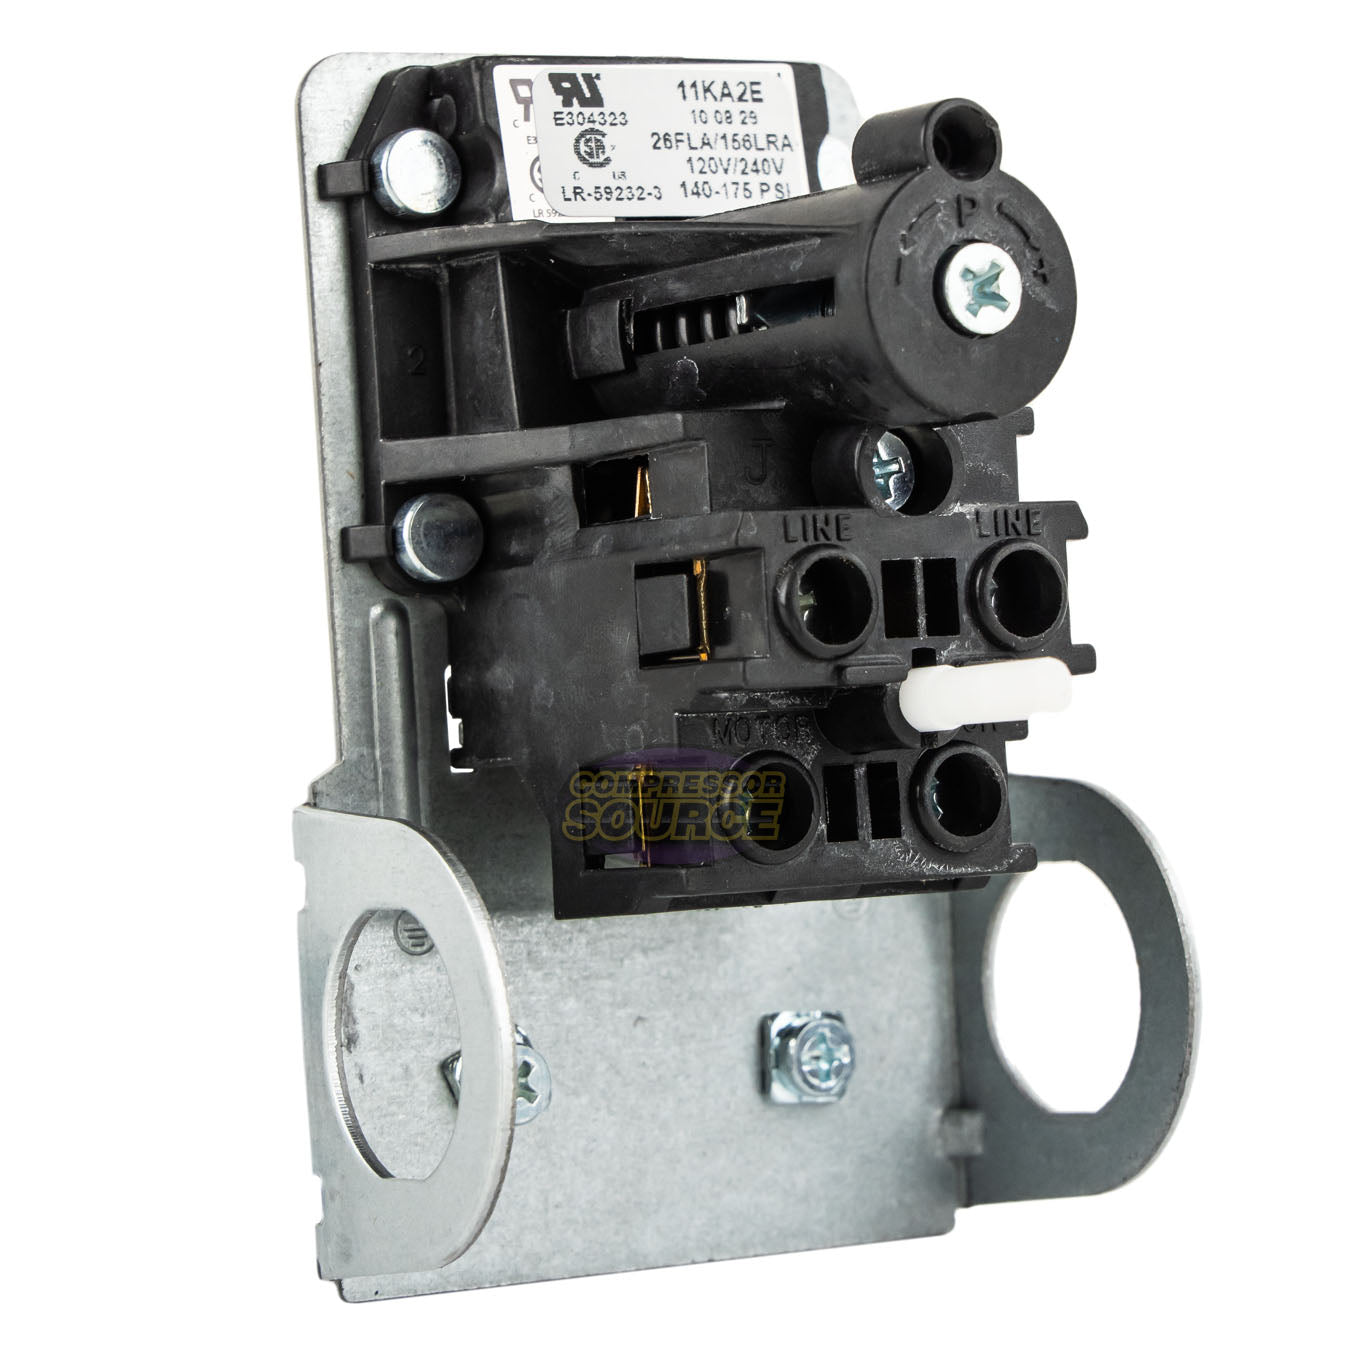 Condor 11KA2E Pressure Switch Control Valve 140-175PSI 1 Port 1/4" FNPT MDR11/11